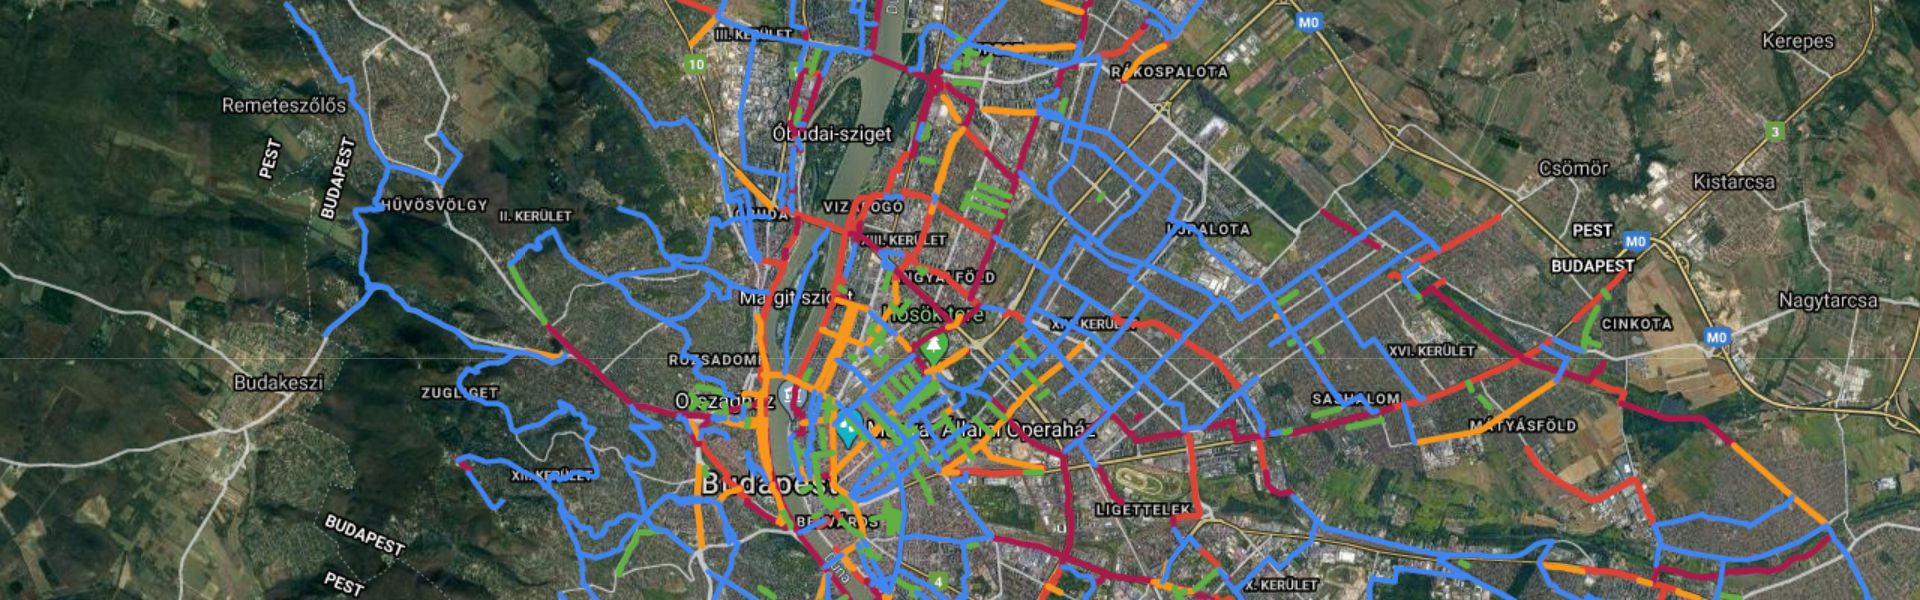 bicikliút budapest térkép Budapesti Kerekparut Terkep bicikliút budapest térkép